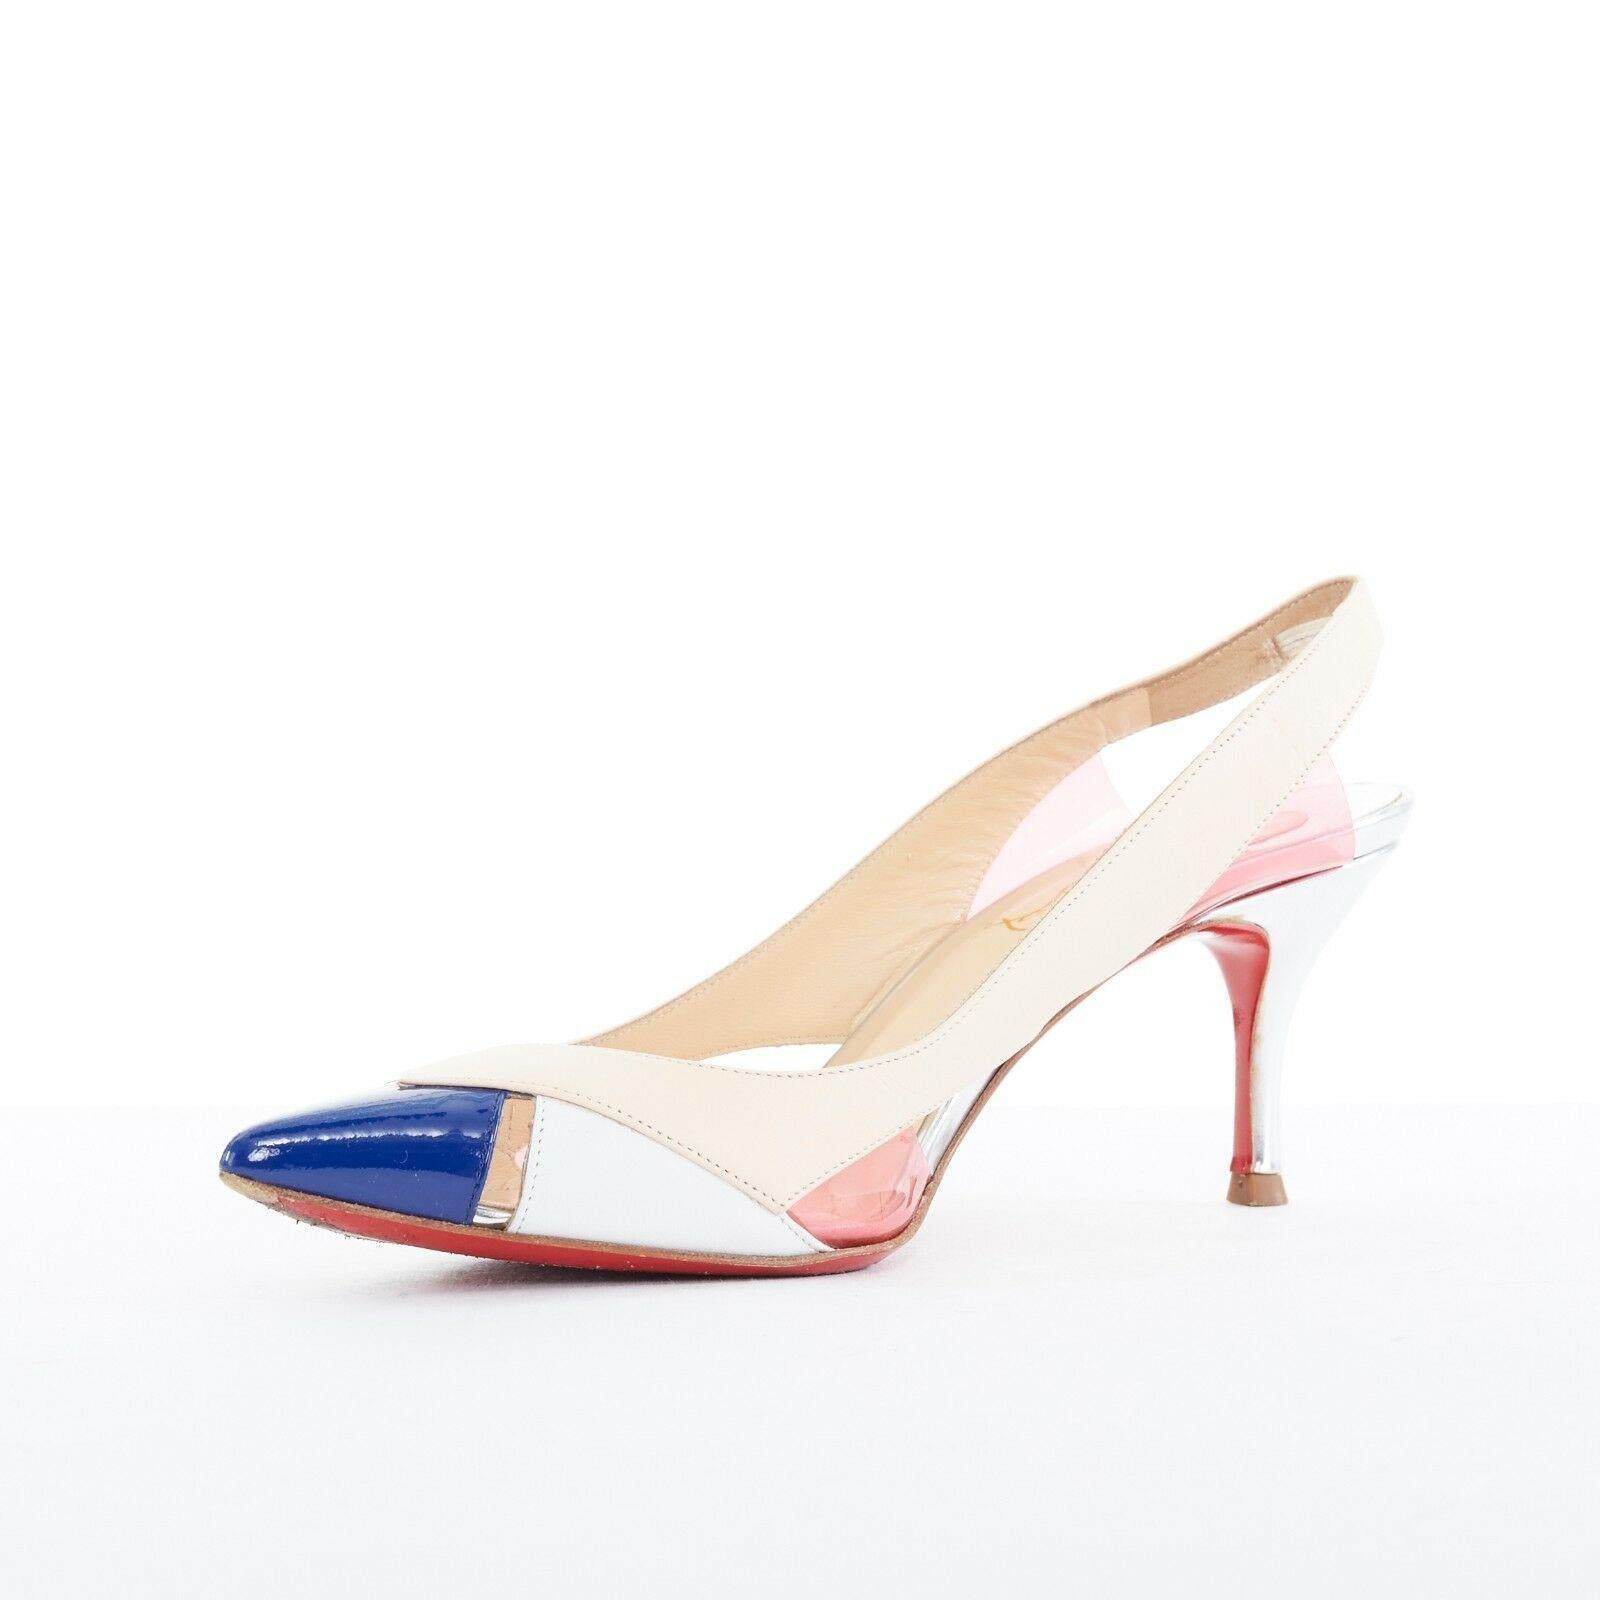 blue pvc heels